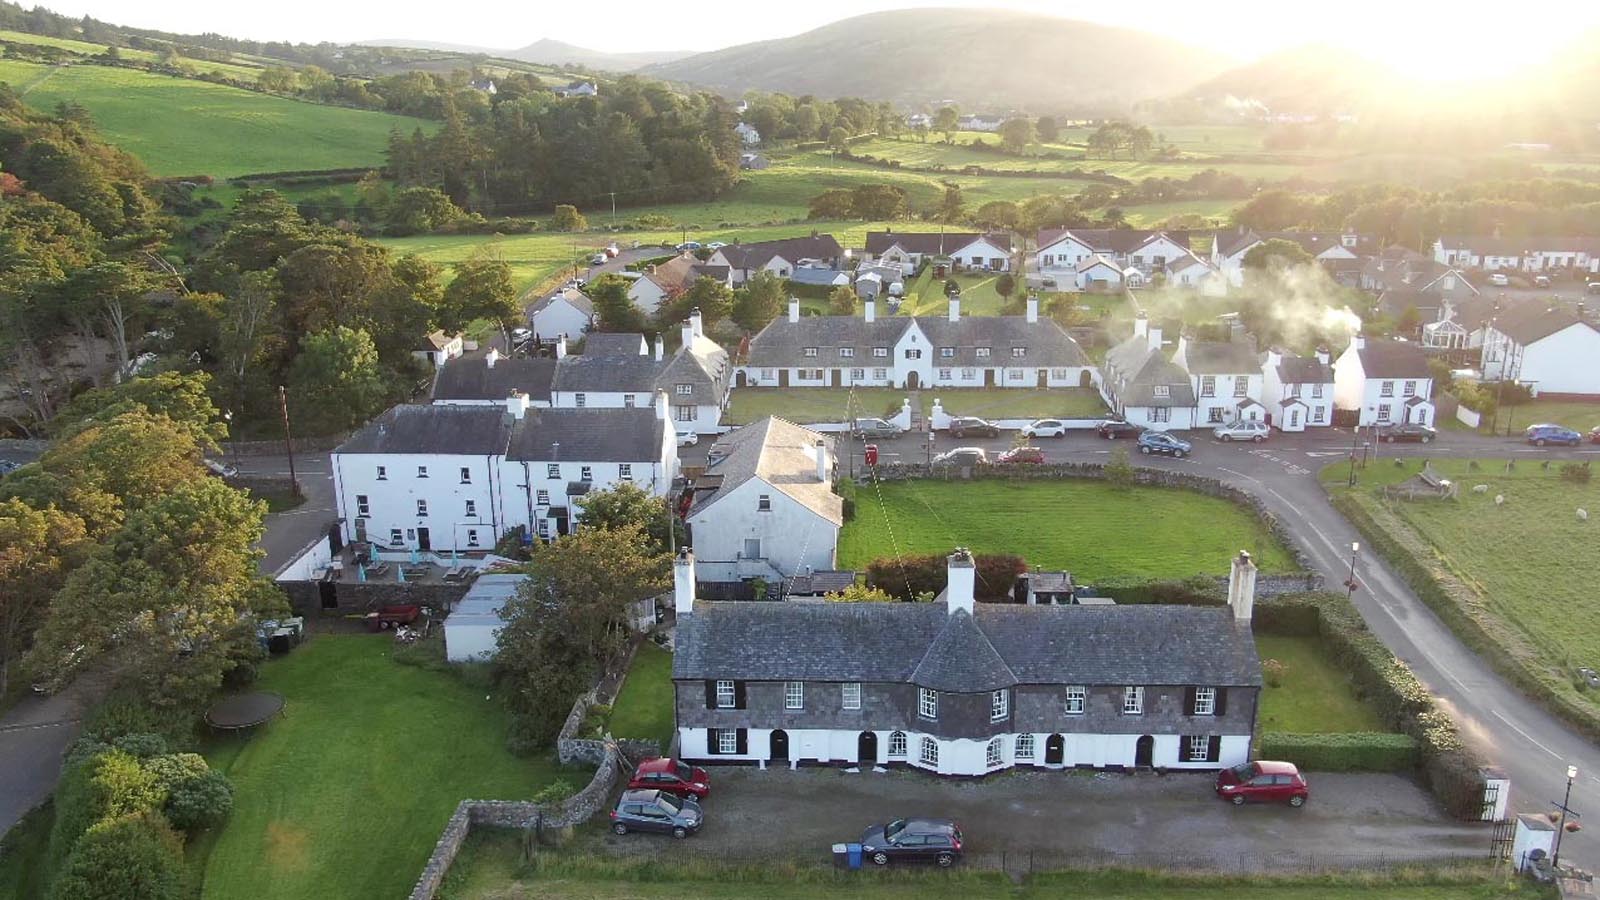 Aerial drone photography and video production services Dublin and Ireland portfolio - screenshot 6 of Glendun to Cushendun video